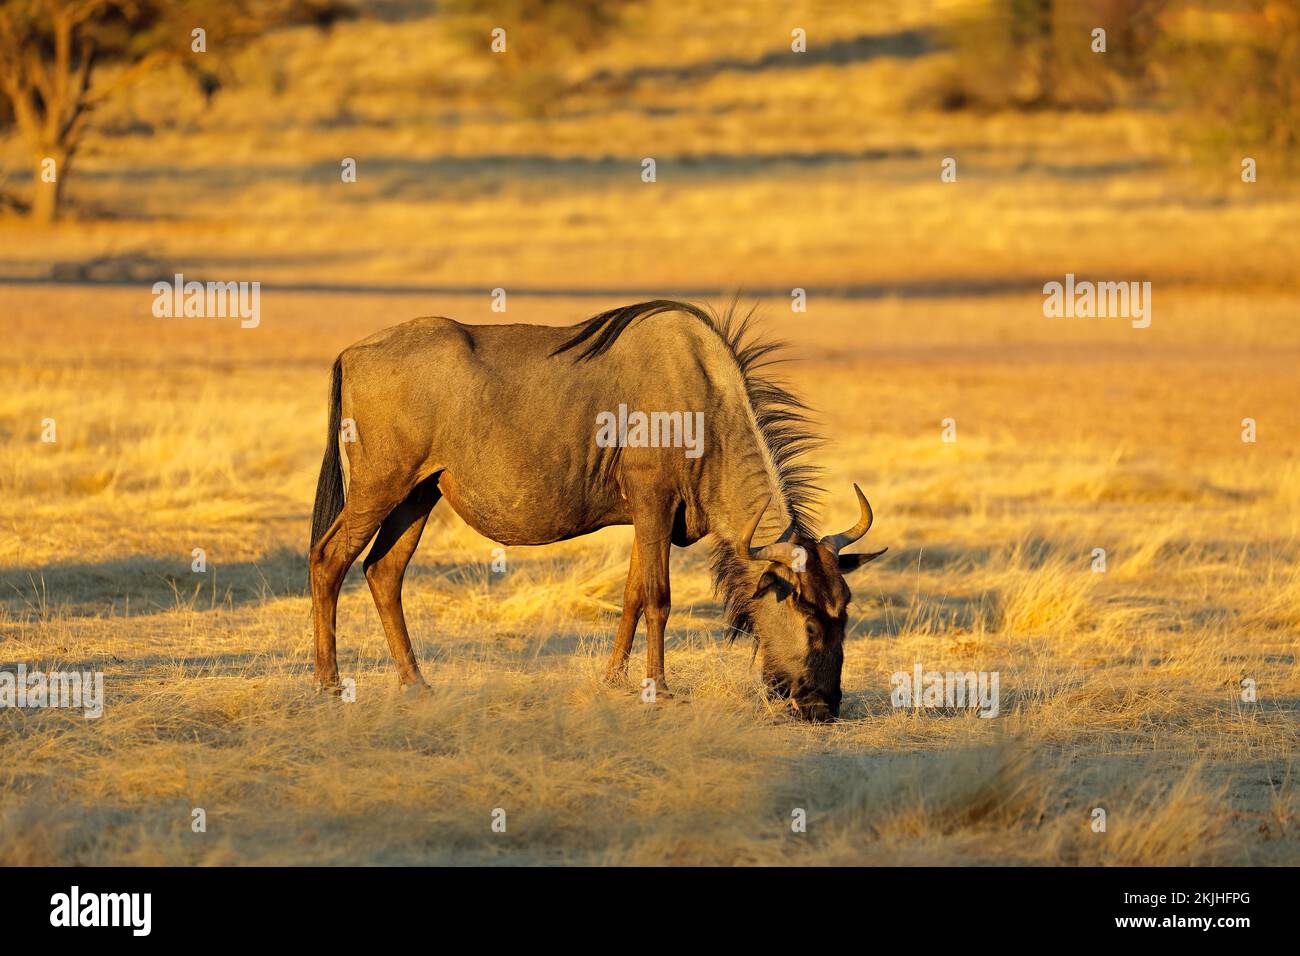 A blue wildebeest (Connochaetes taurinus) grazing in natural habitat, Kalahari desert, South Africa Stock Photo